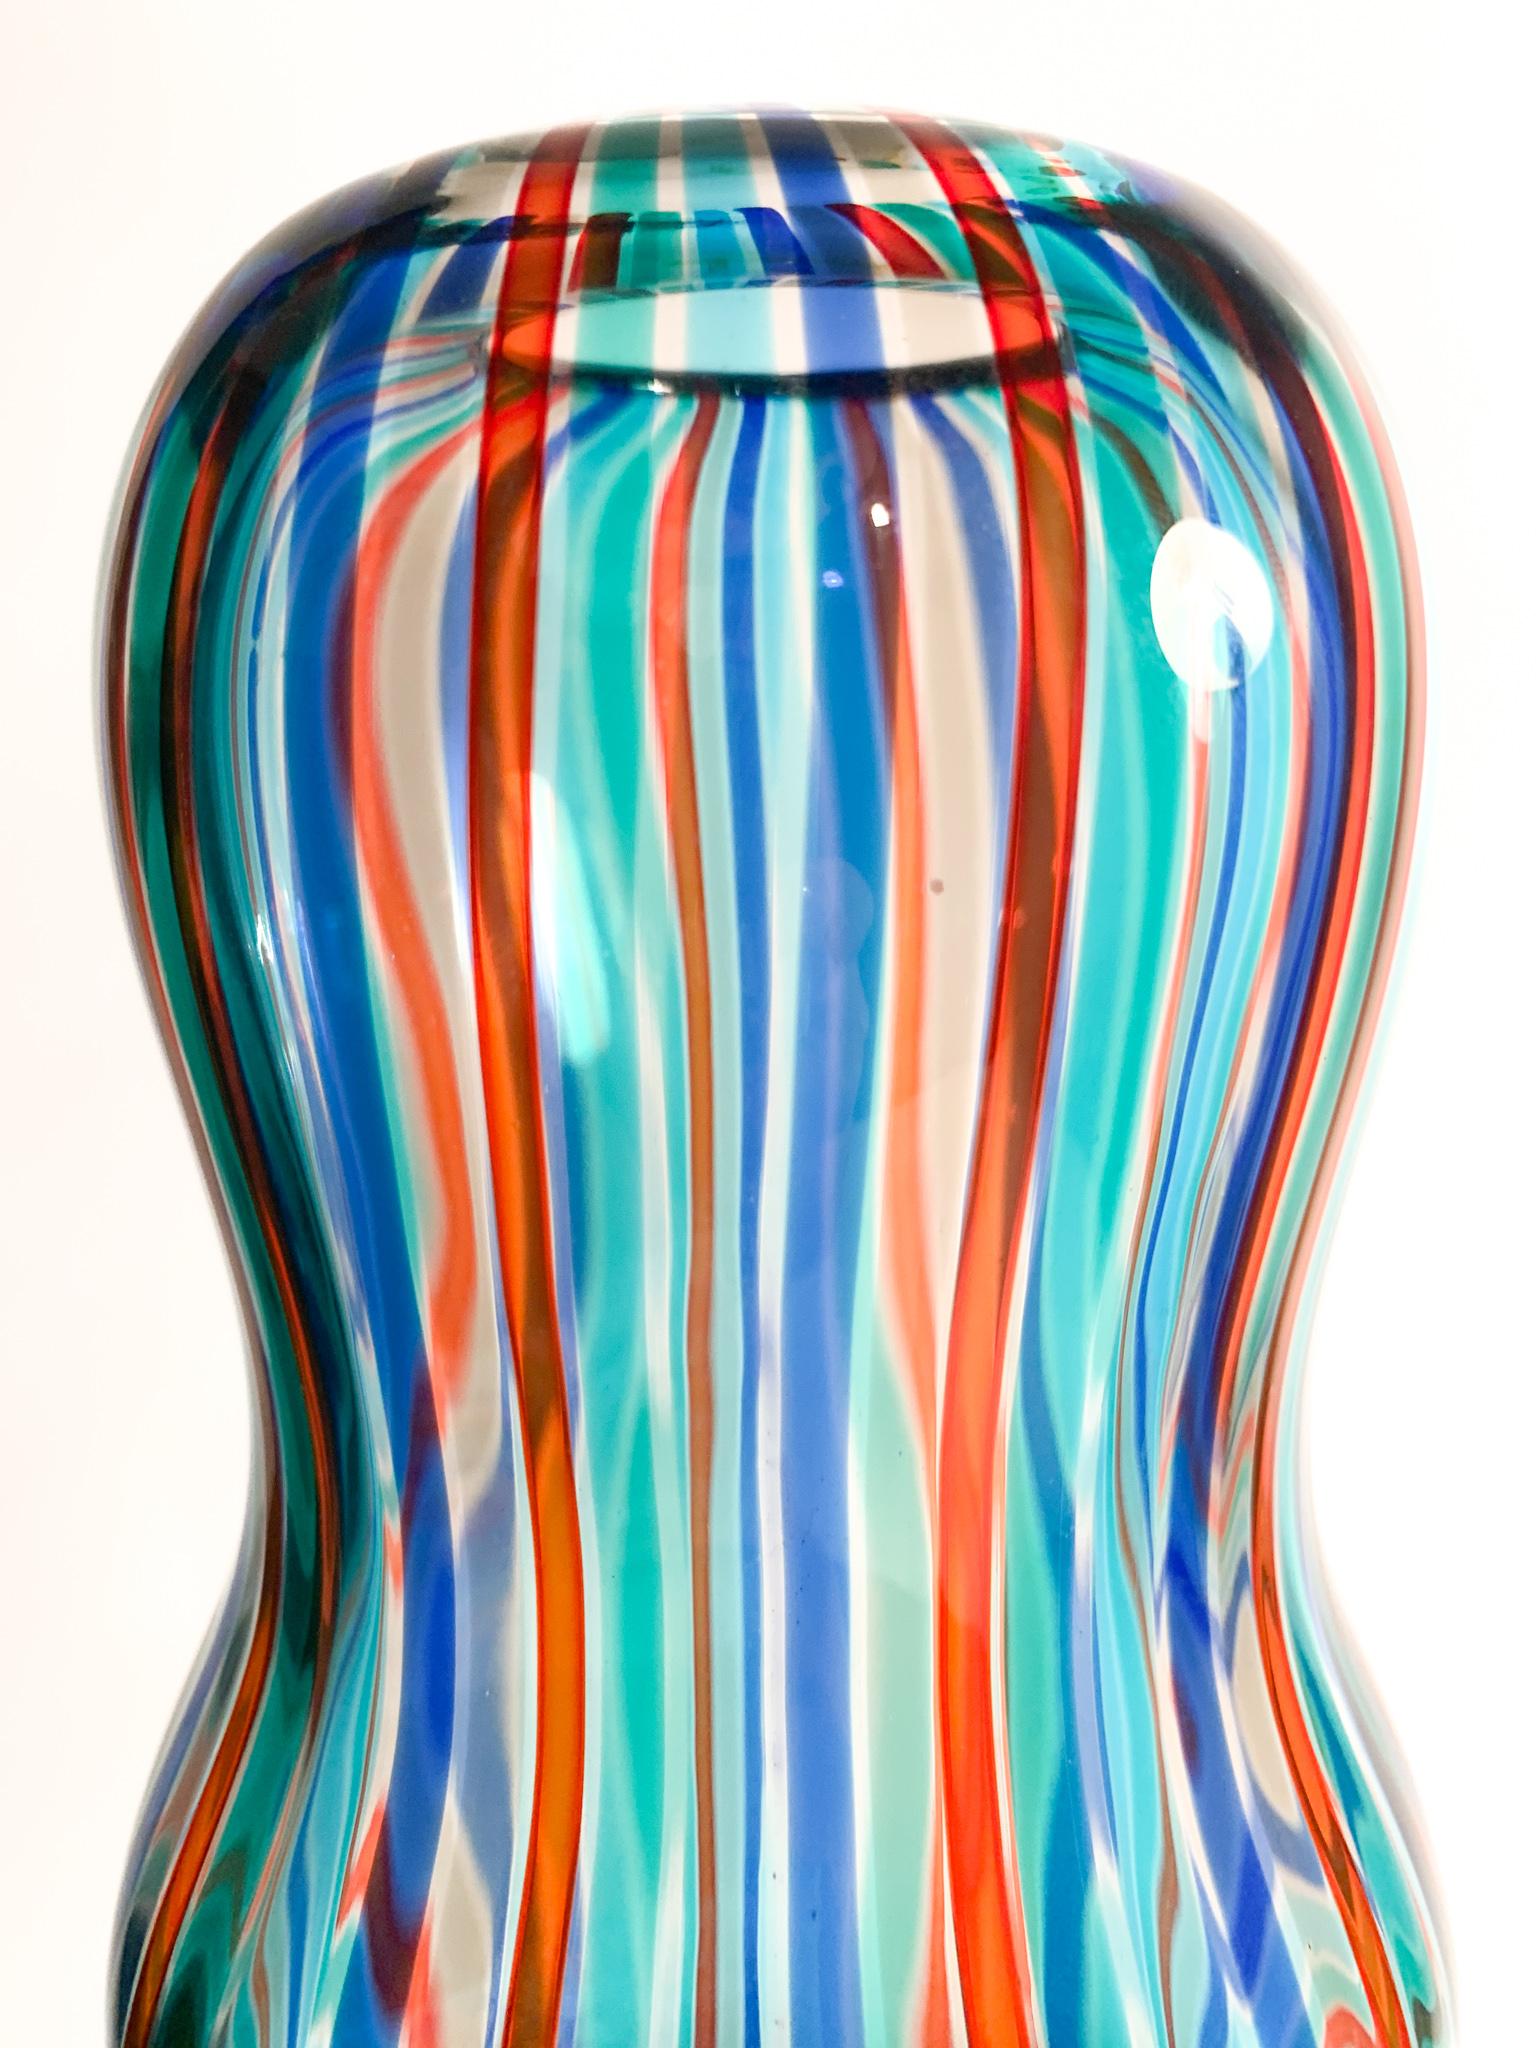 'Arado' Vase by Alessandro Mendini for Venini from 1988 For Sale 9